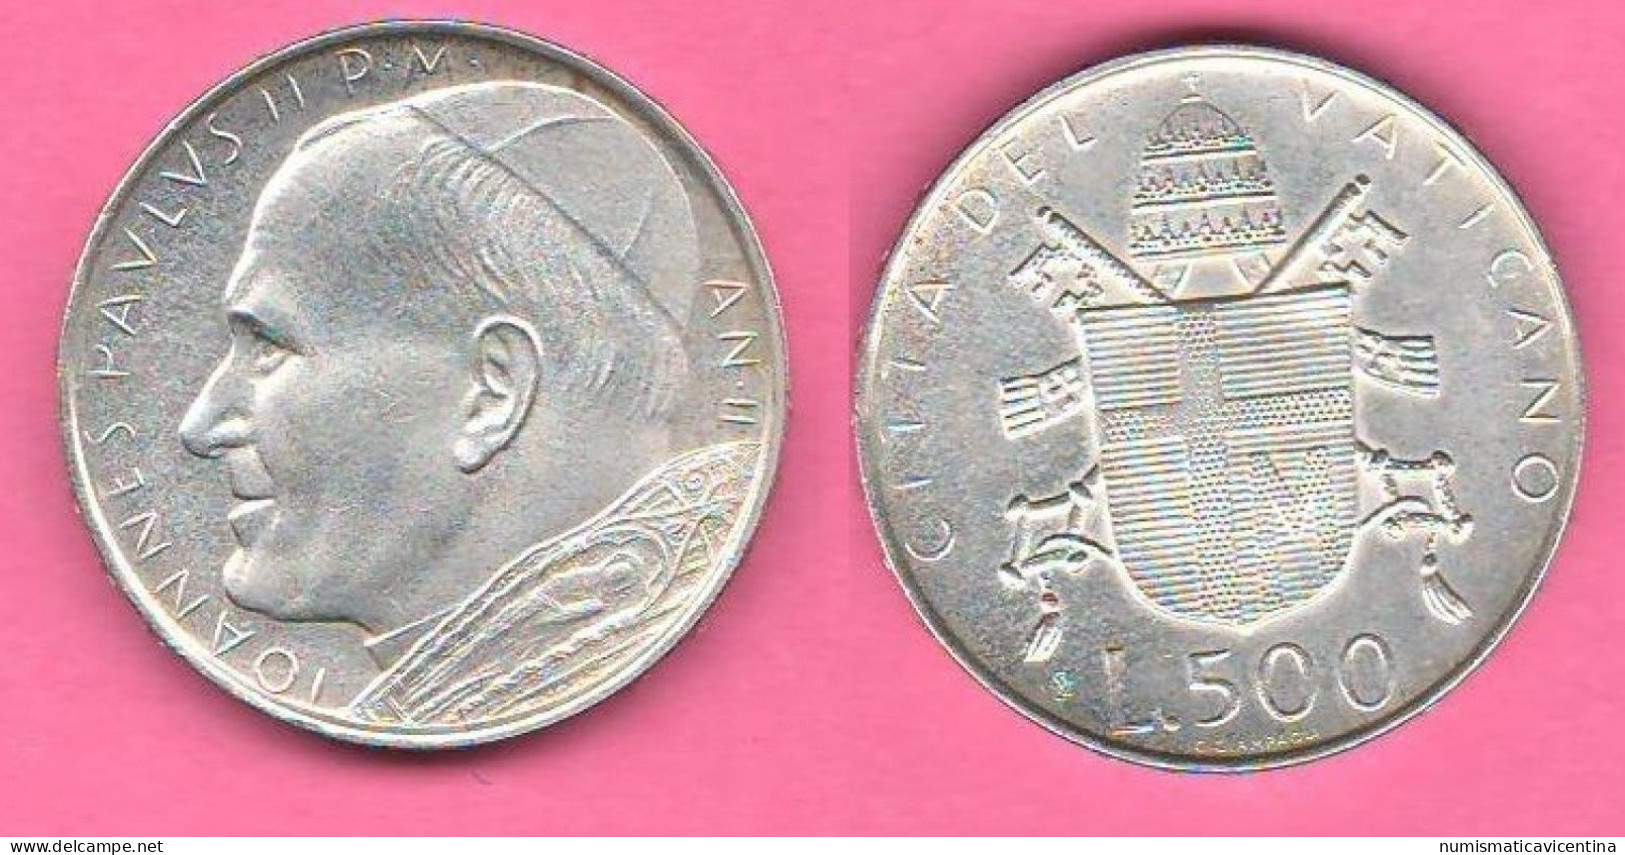 Vaticano 500 Lire 1980 Wojtyla Anno II° Vatican City Italie Italy Silver Coin - Vatikan